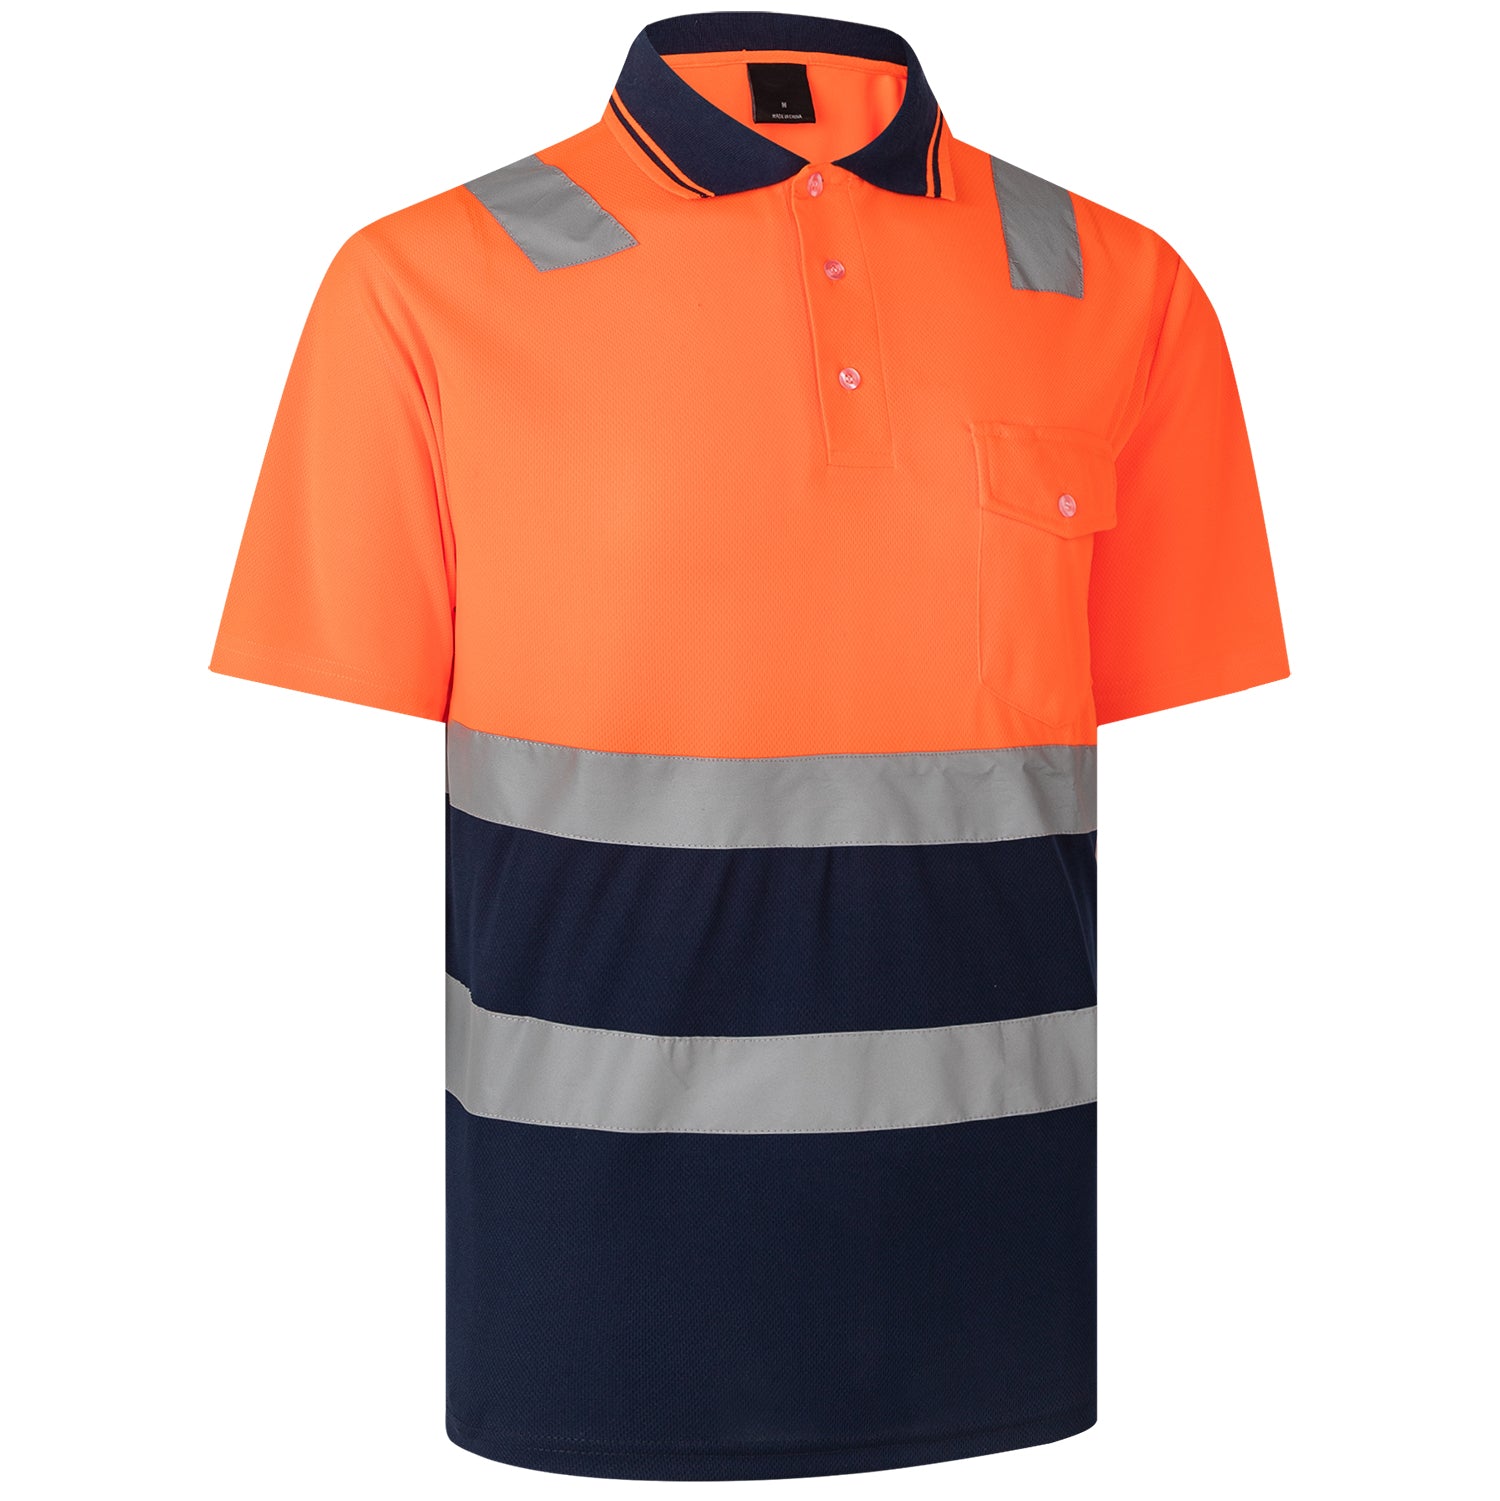 HI VIS Short Sleeve Workwear Shirt w Reflective Tape Cool Dry Safety Polo 2 Tone, Fluoro Orange / Navy, M